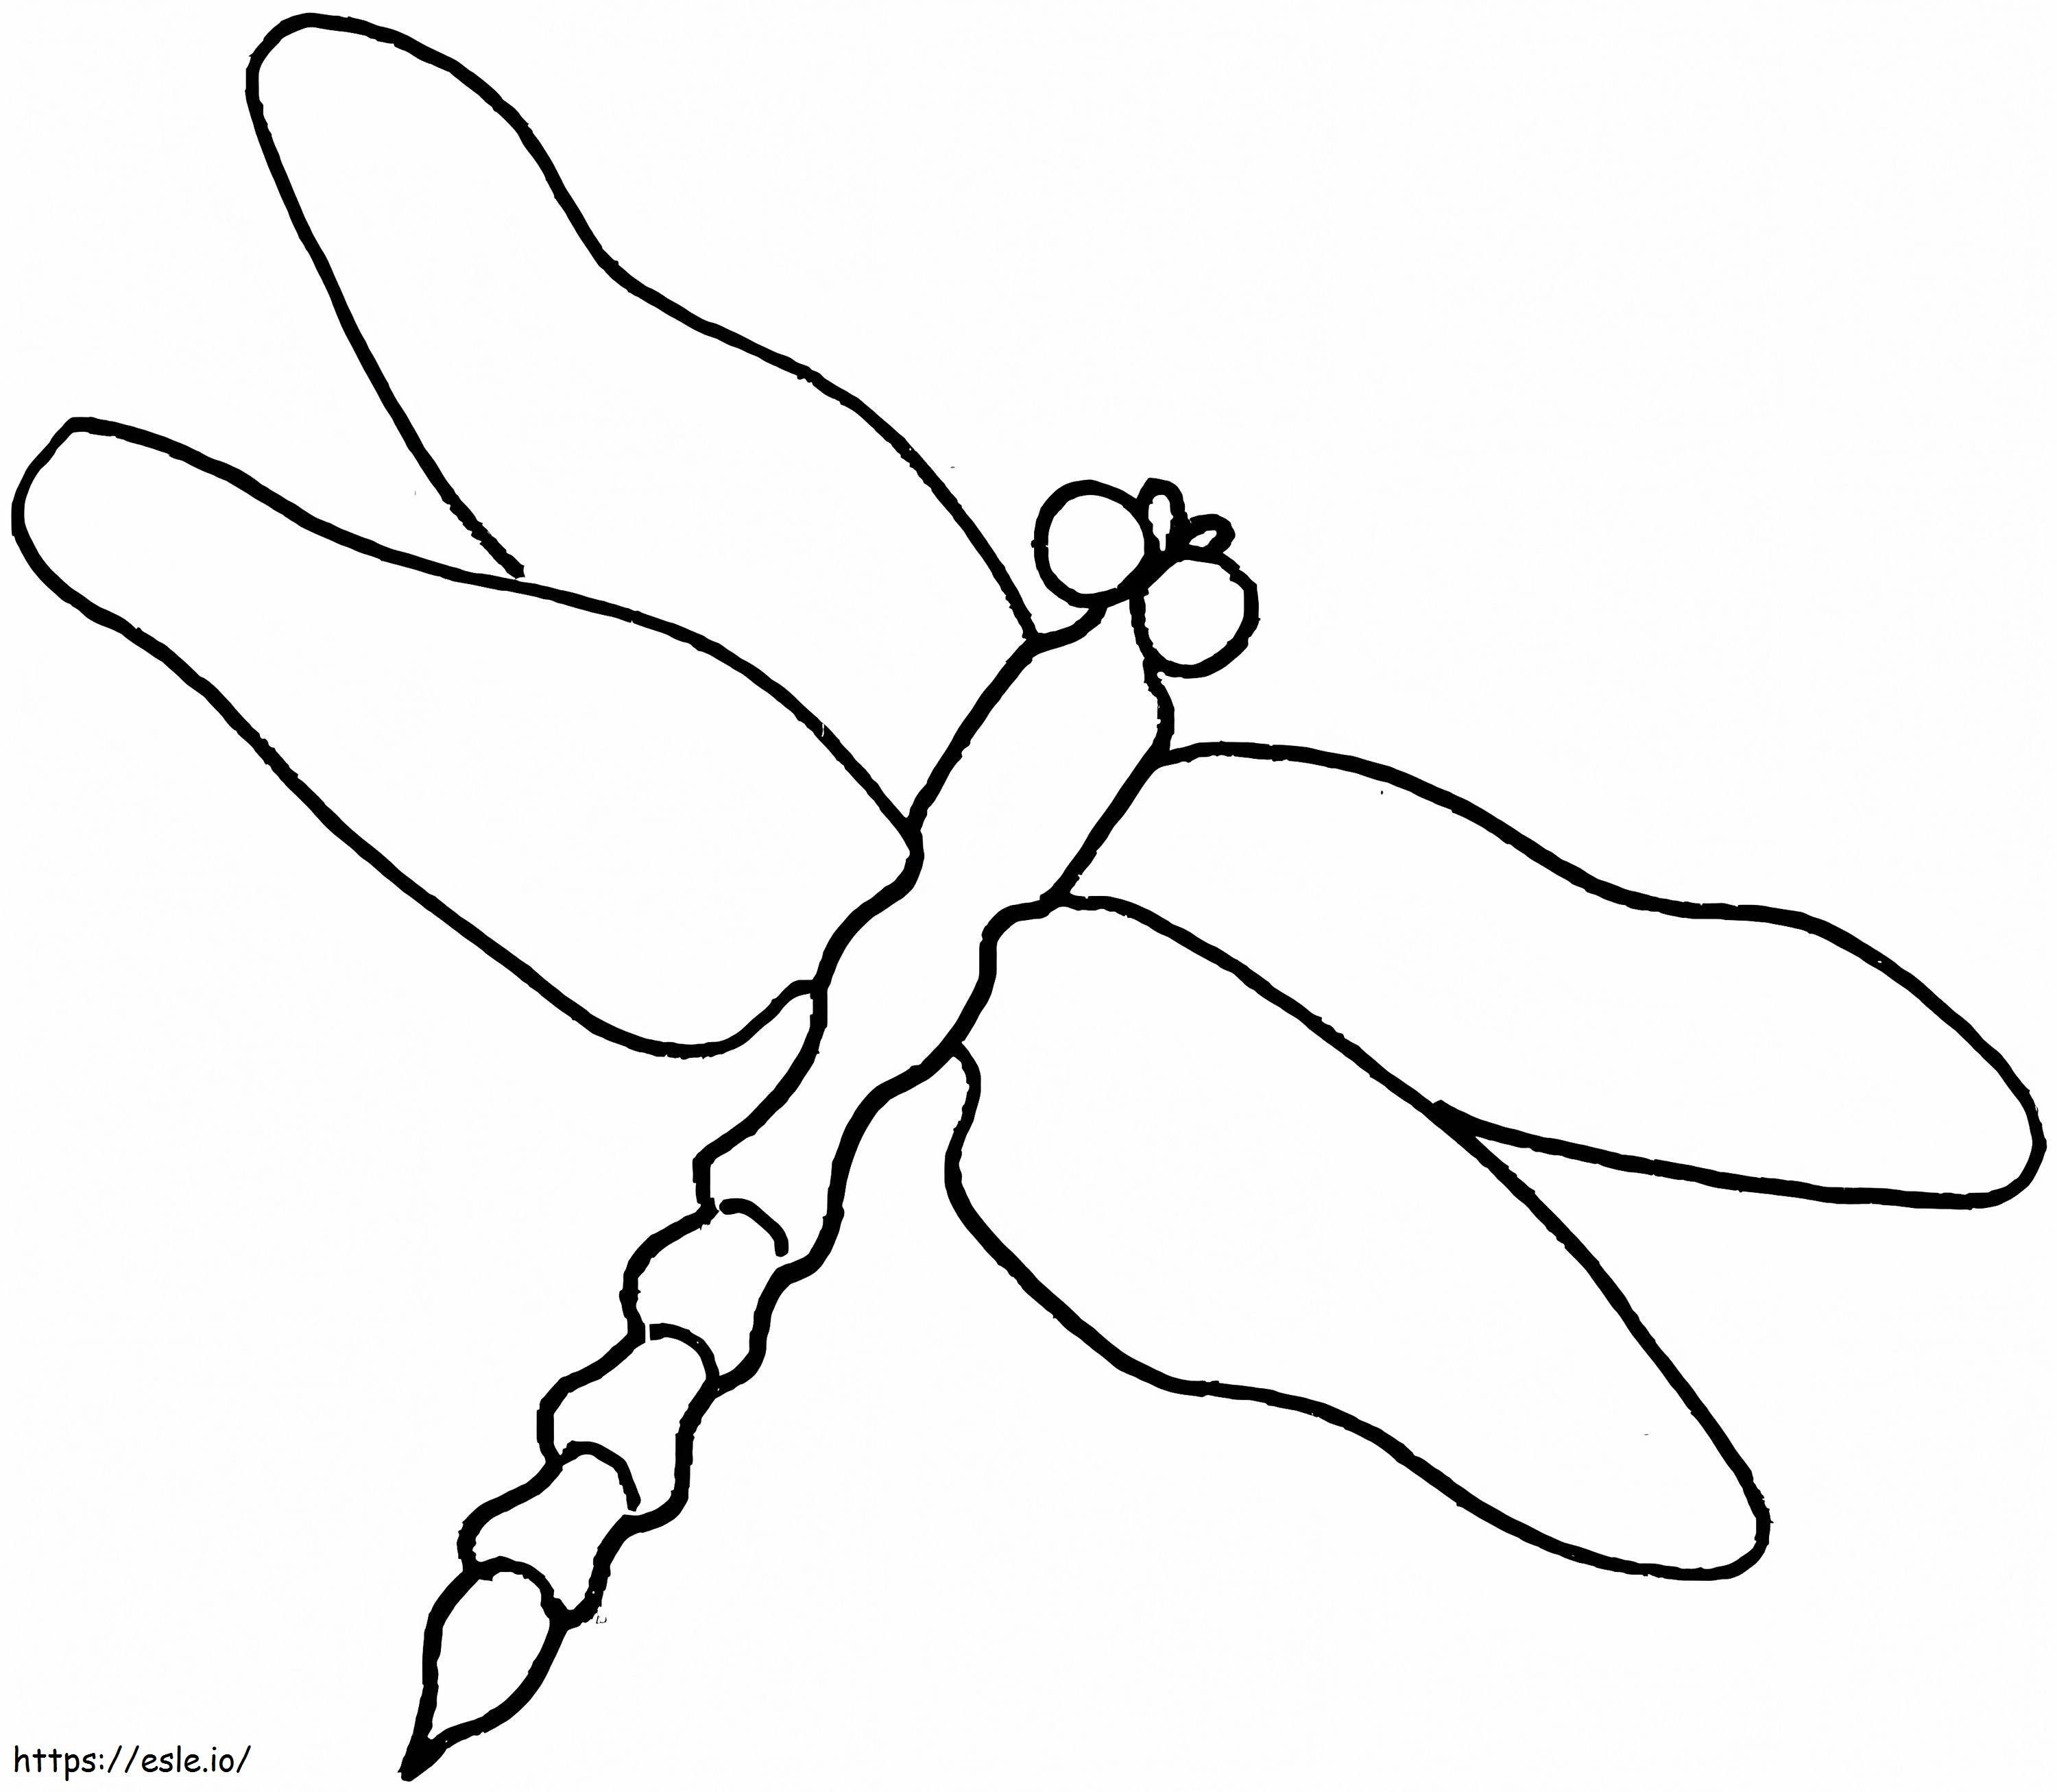 Linha de libélula para colorir